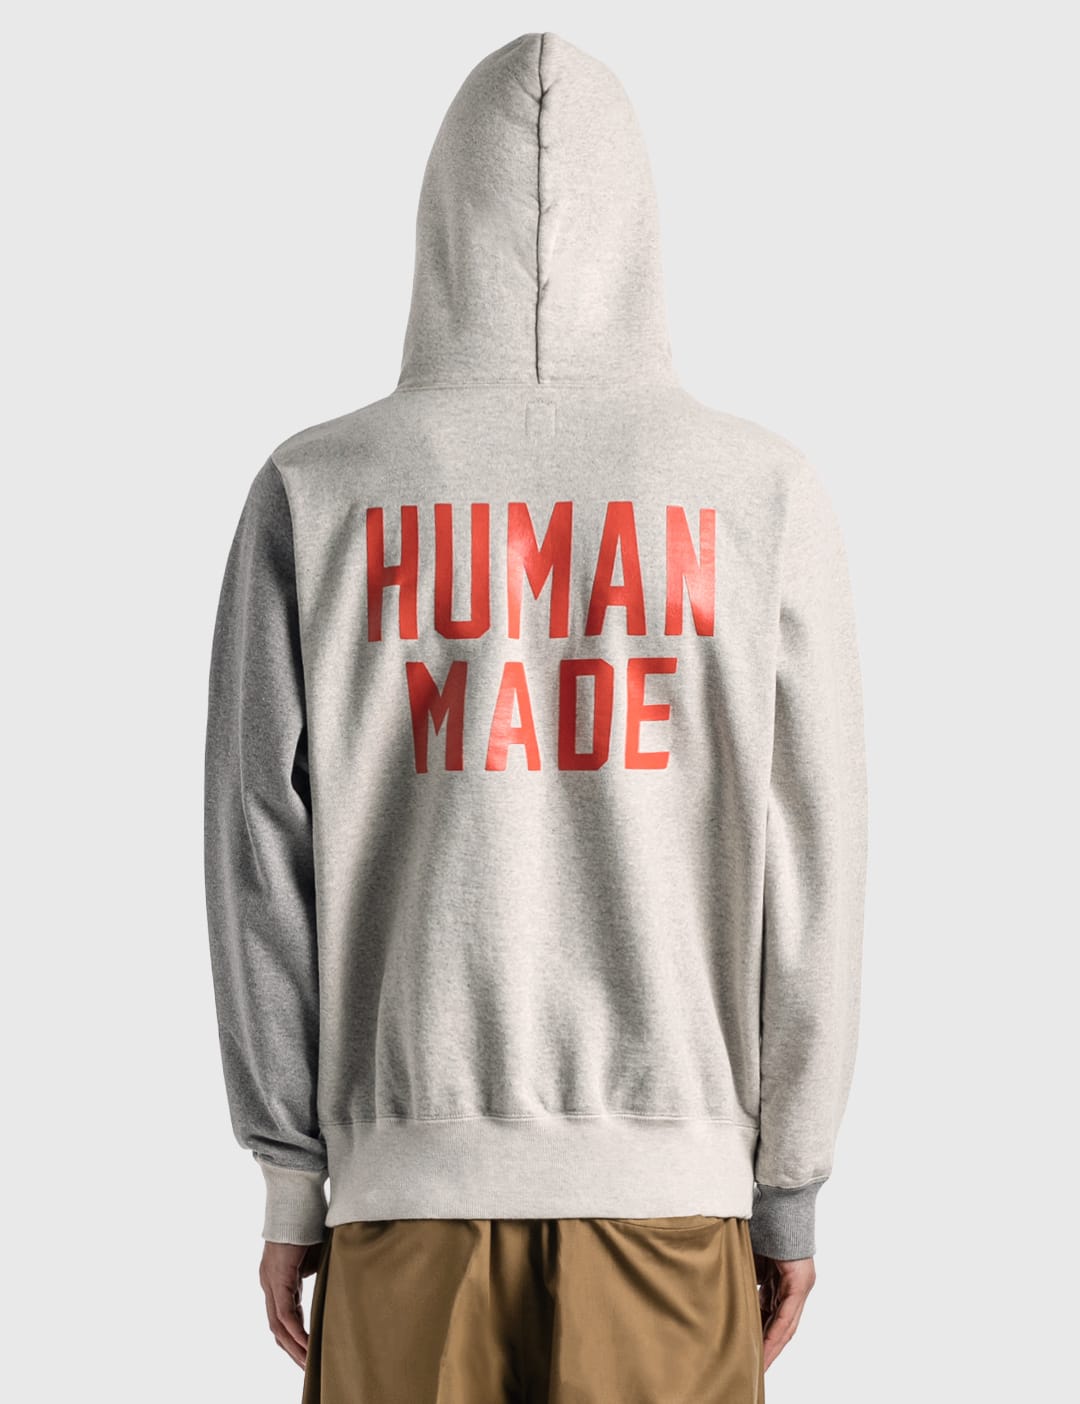 HUMAN MADE / PIZZA HOODIE "Grey" XL